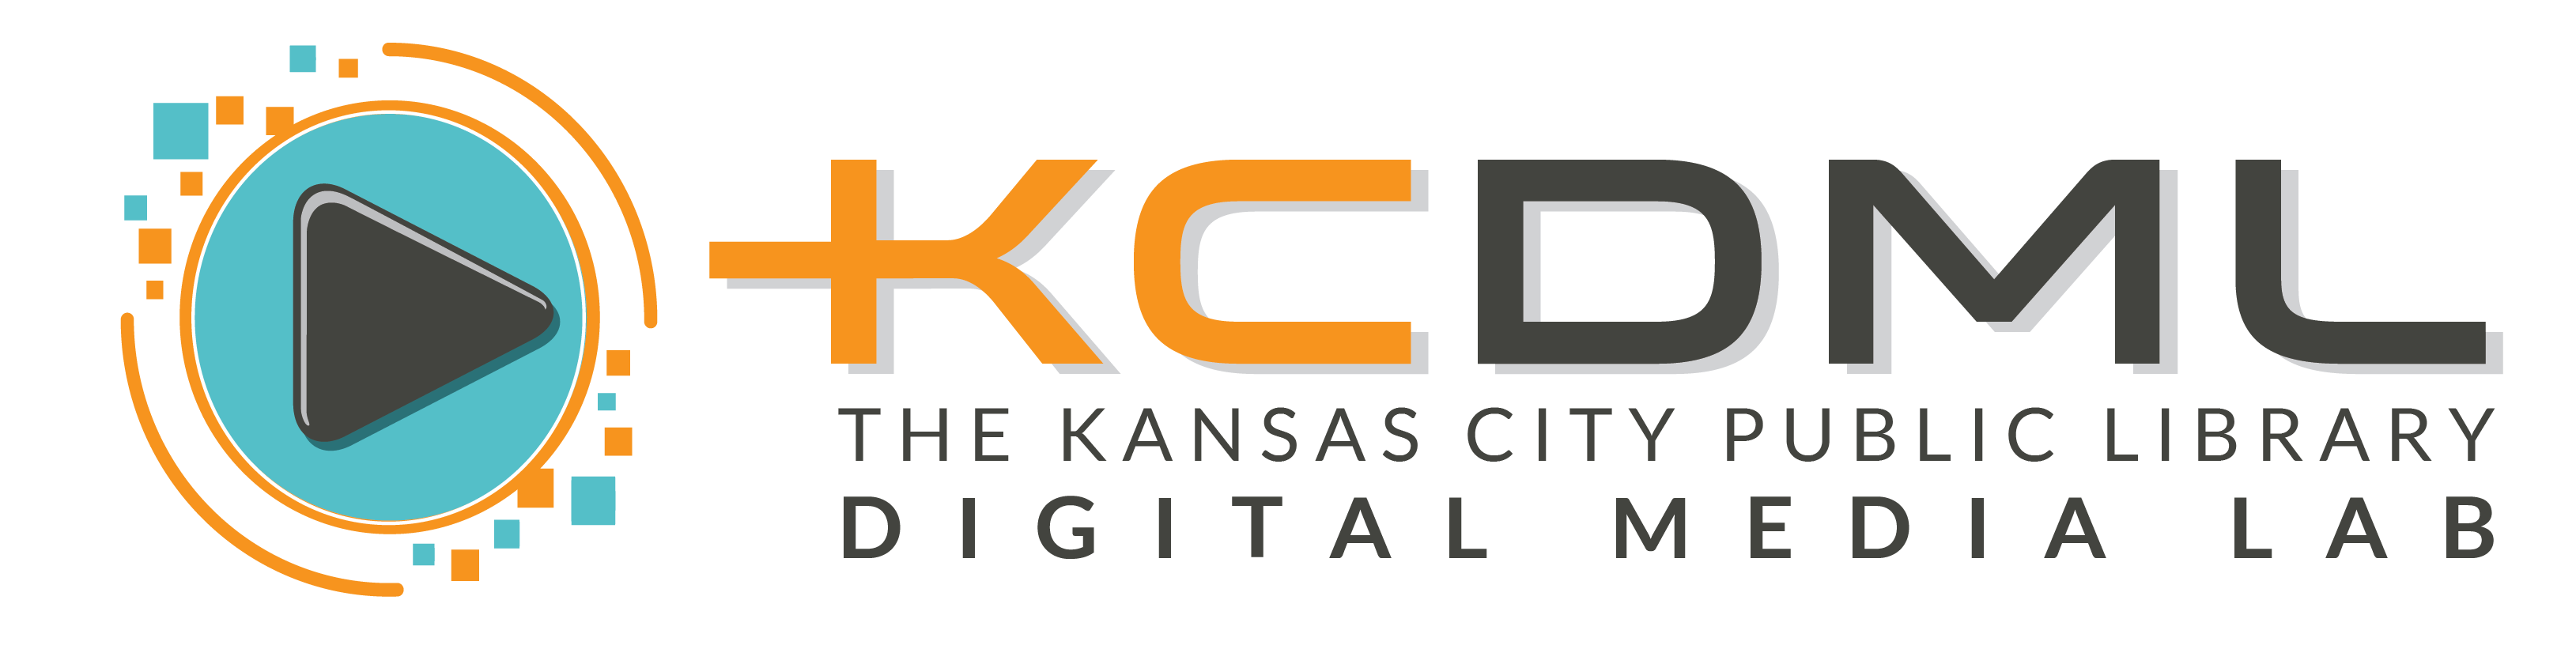 grua Premio problema Kansas City Digital Media Lab